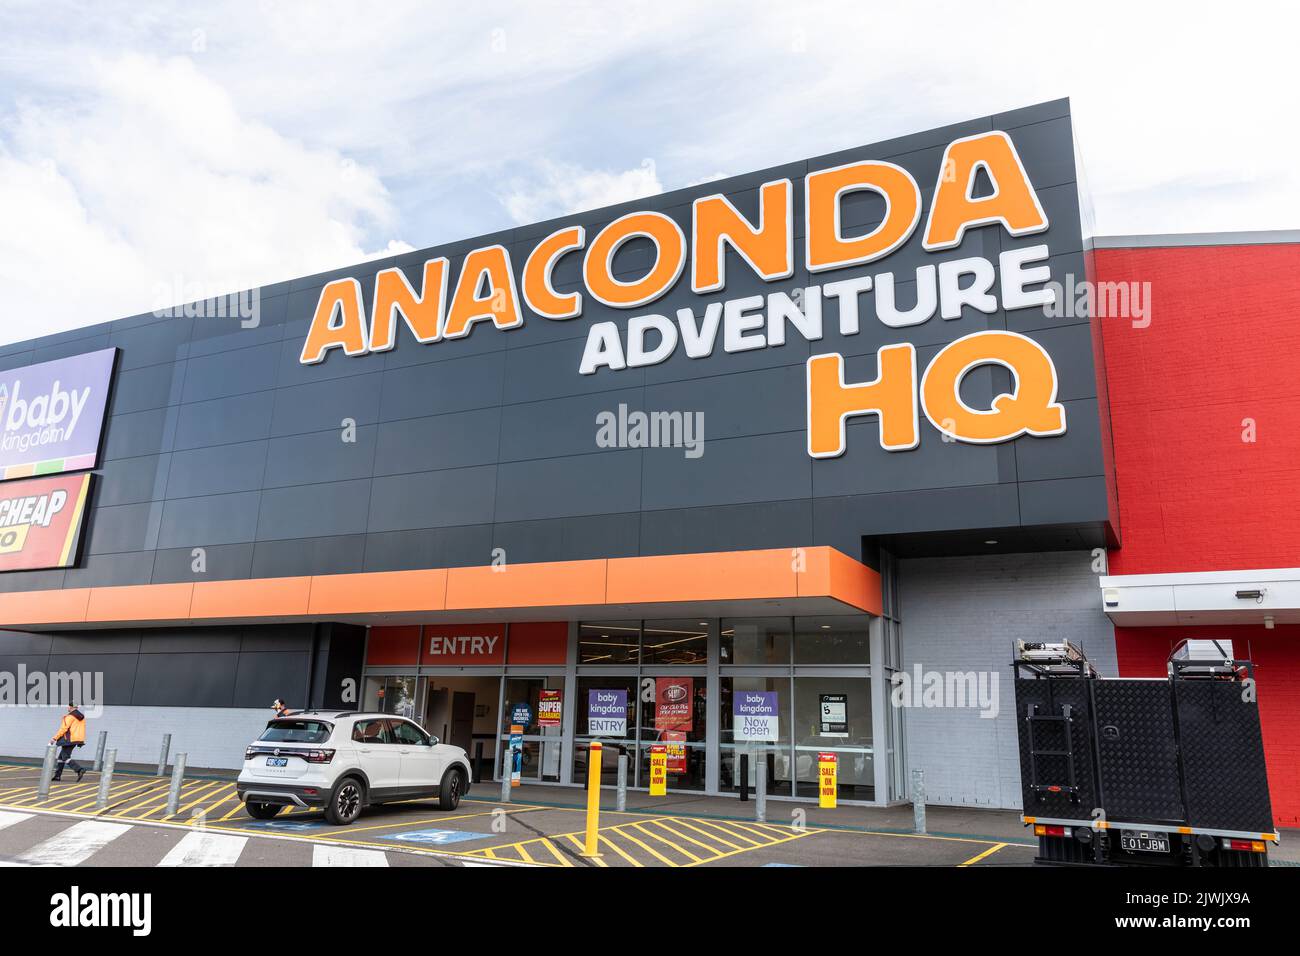 Anaconda Adventure store in Chullora Sydney, selling equipment for